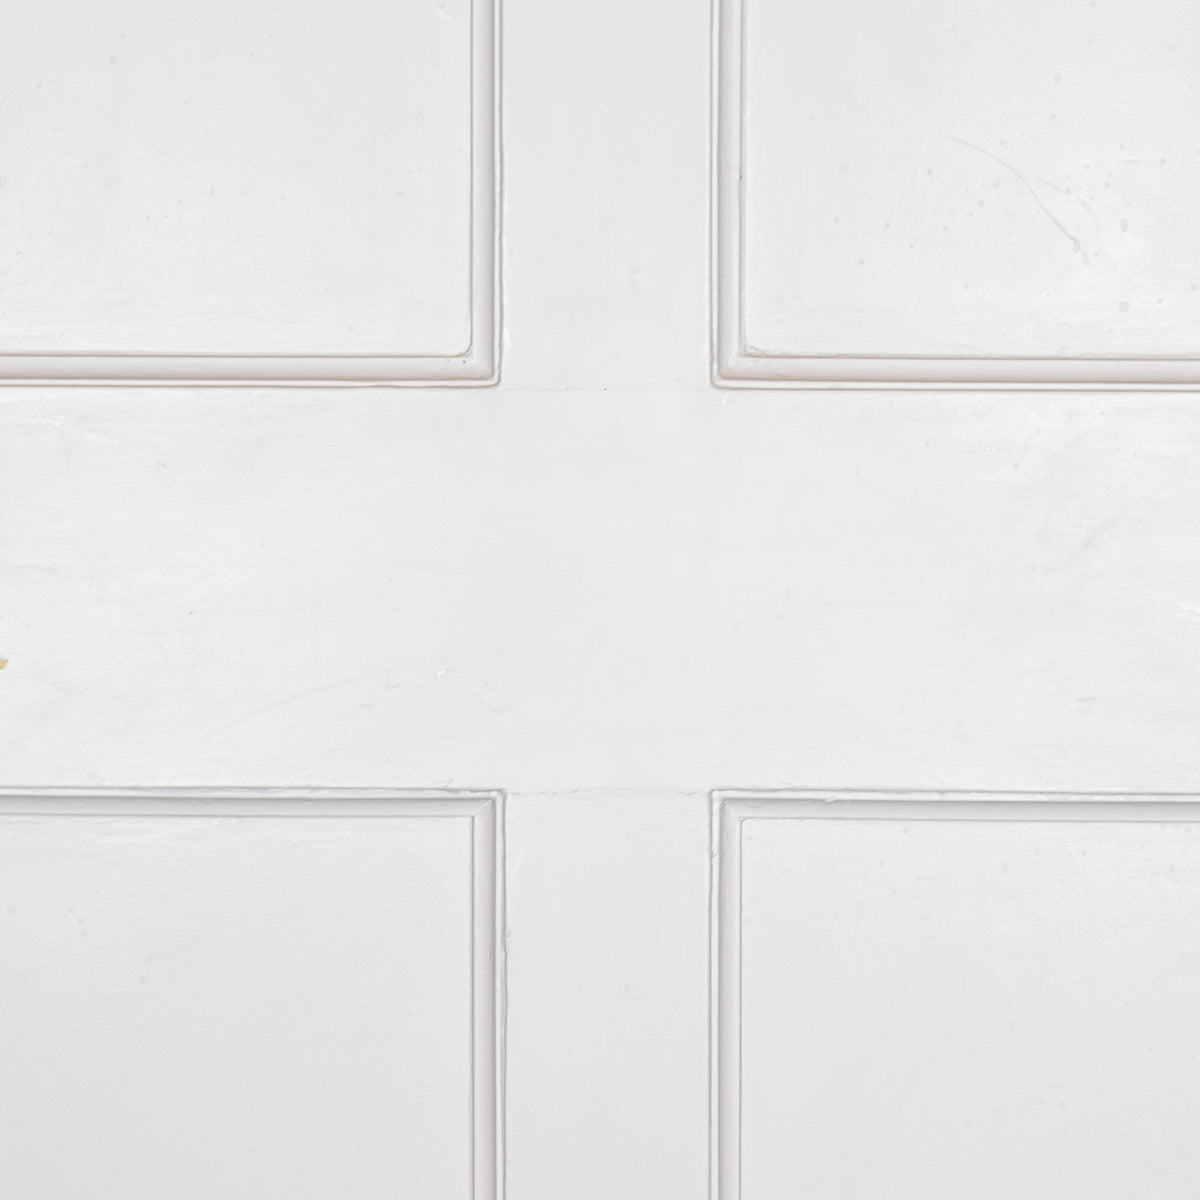 Antique Victorian 4 Panel Door - 195 x 89.5cm | The Architectural Forum